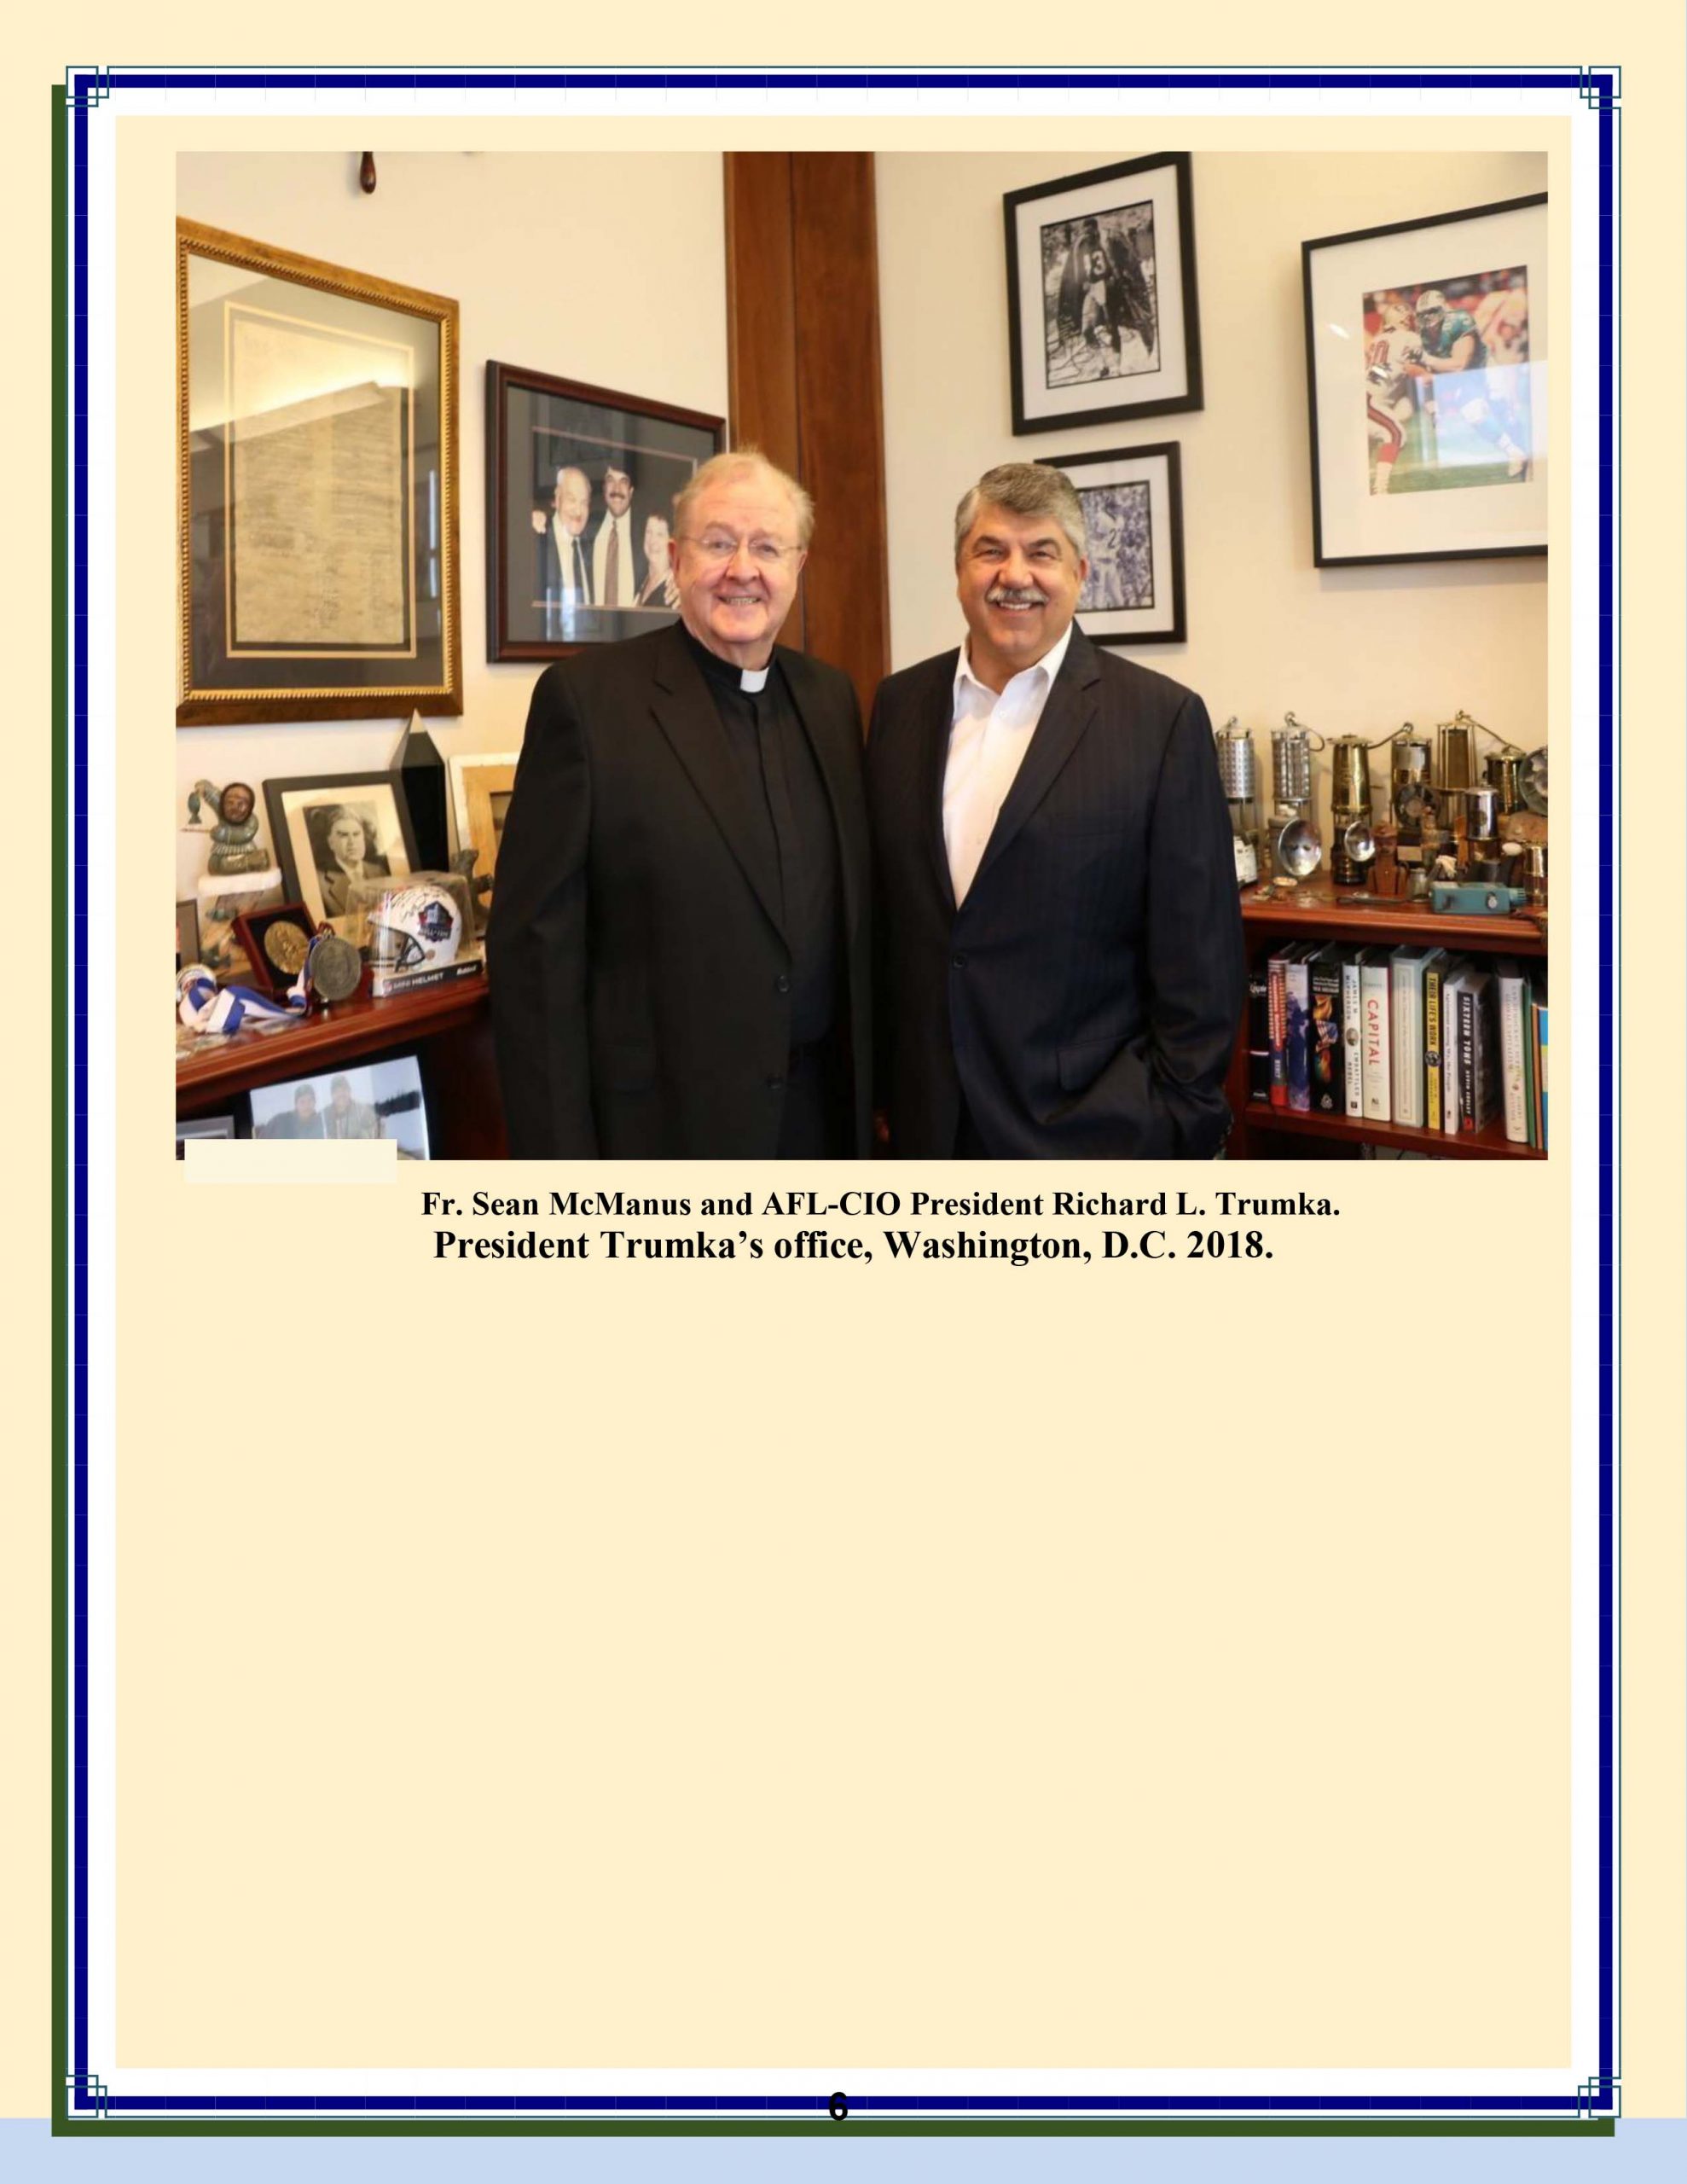 Fr. Sean McManus and AFL-CIO President Richard L. Trumka